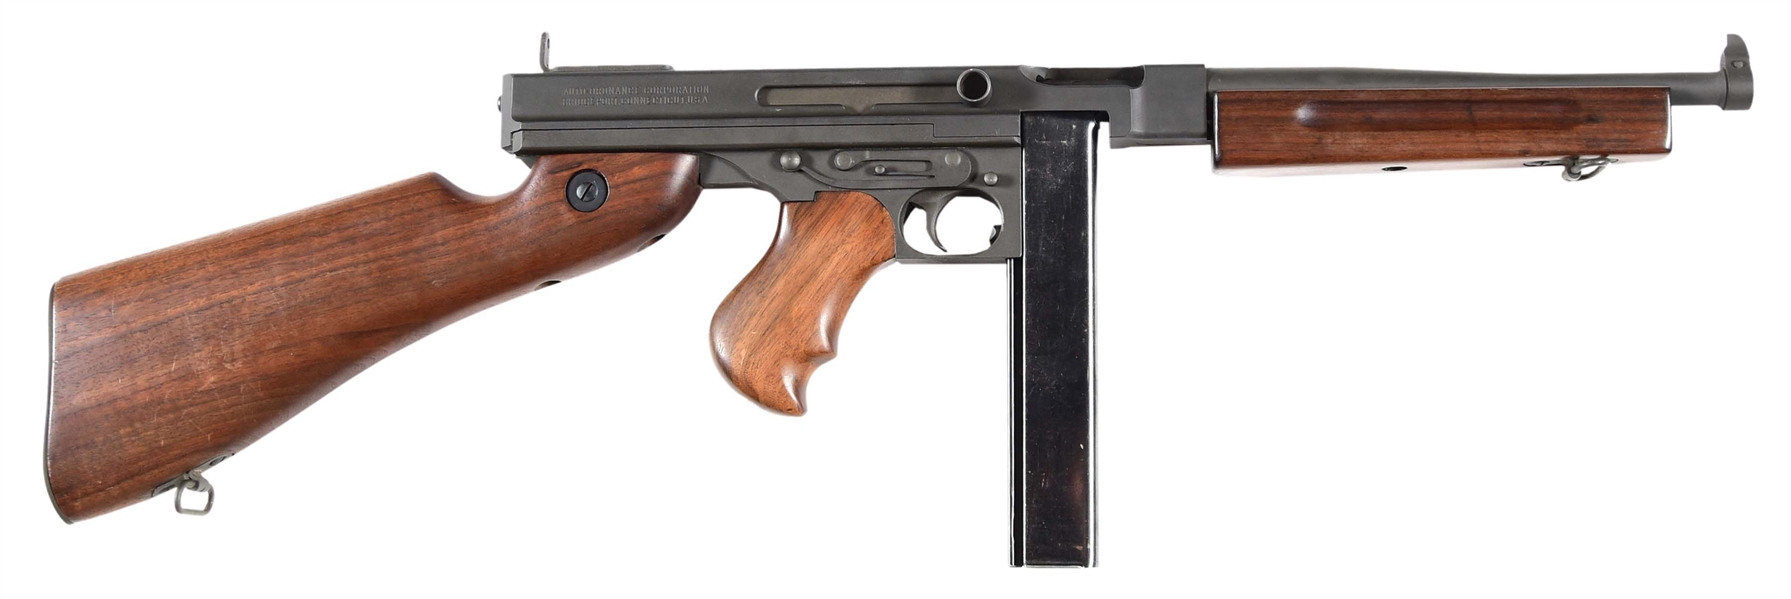 (N) SCARCE M1 MODEL THOMPSON MACHINE GUN FROM WORLD WAR II ERA (CURIO AND RELIC).